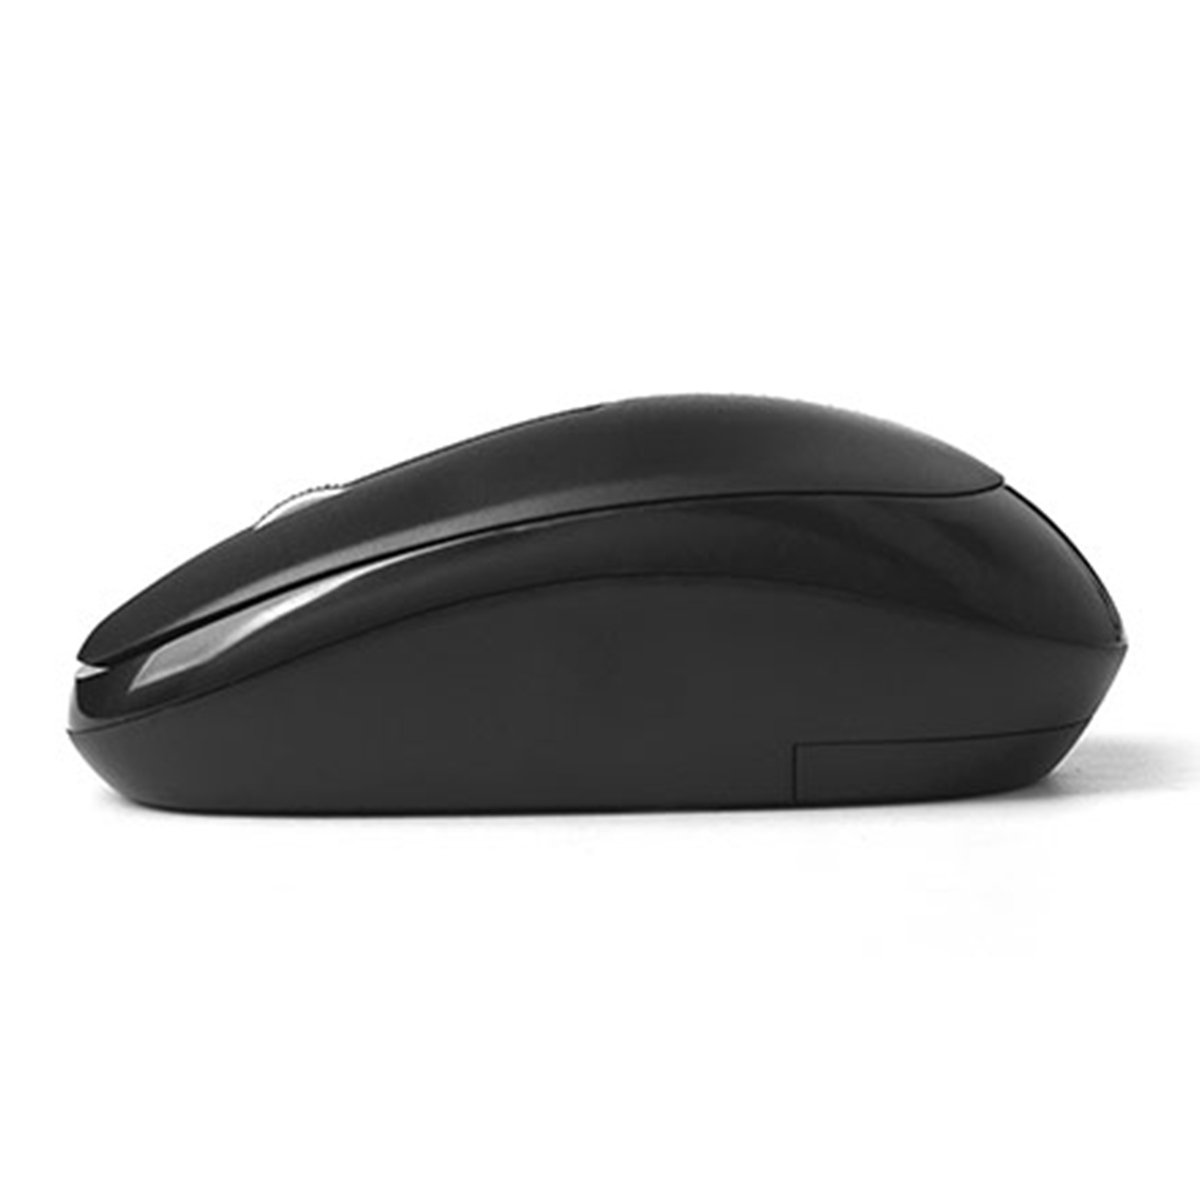 Viewsonic Wireless Mouse MW104 Black